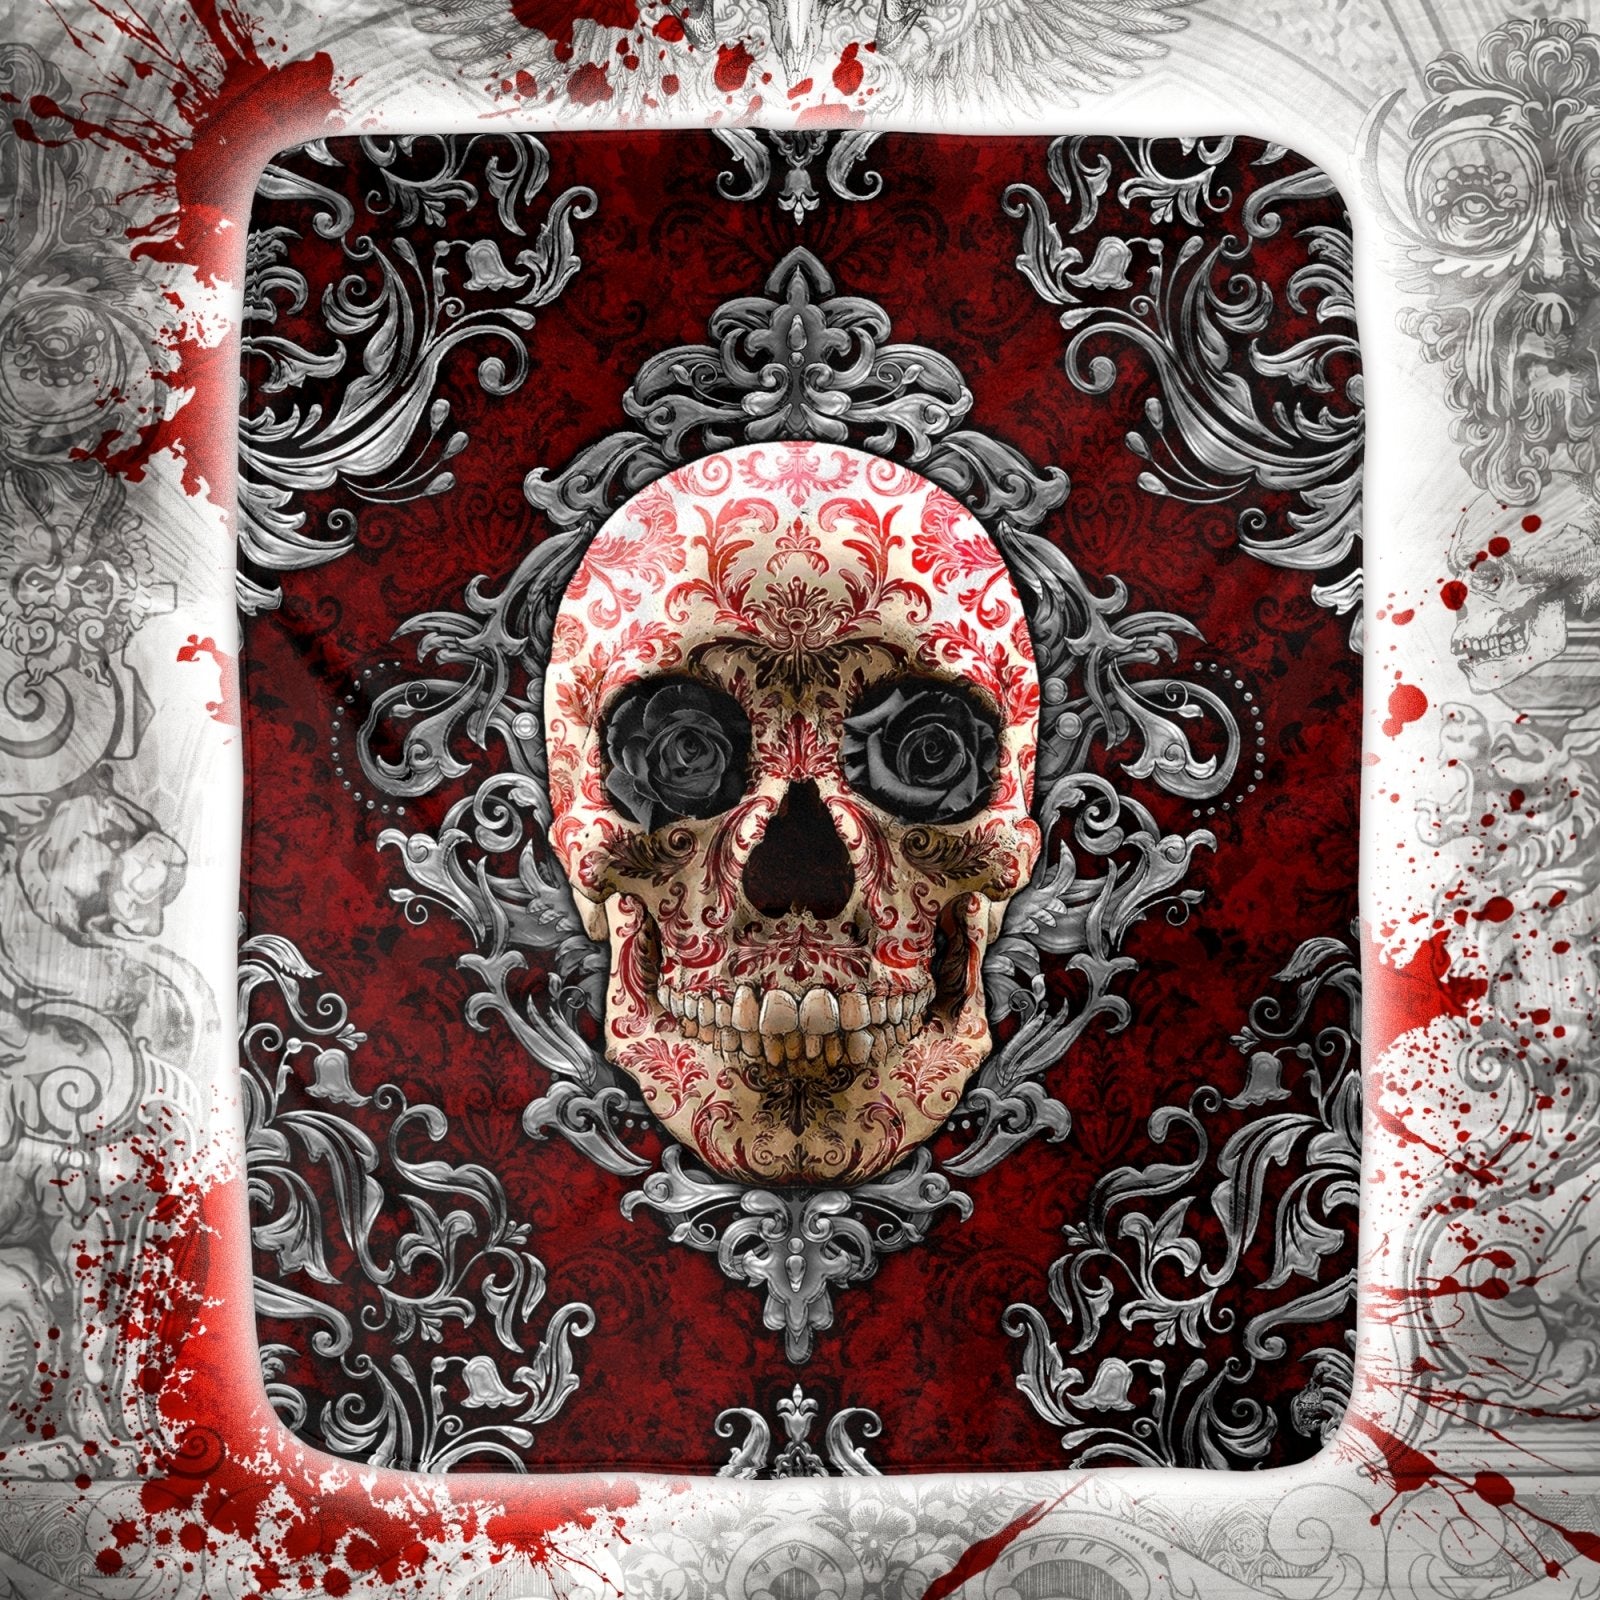 Gothic Skull Throw Fleece Blanket, Macabre Art, Alternative Home Decor, Alternative Art Gift - Goth - Abysm Internal